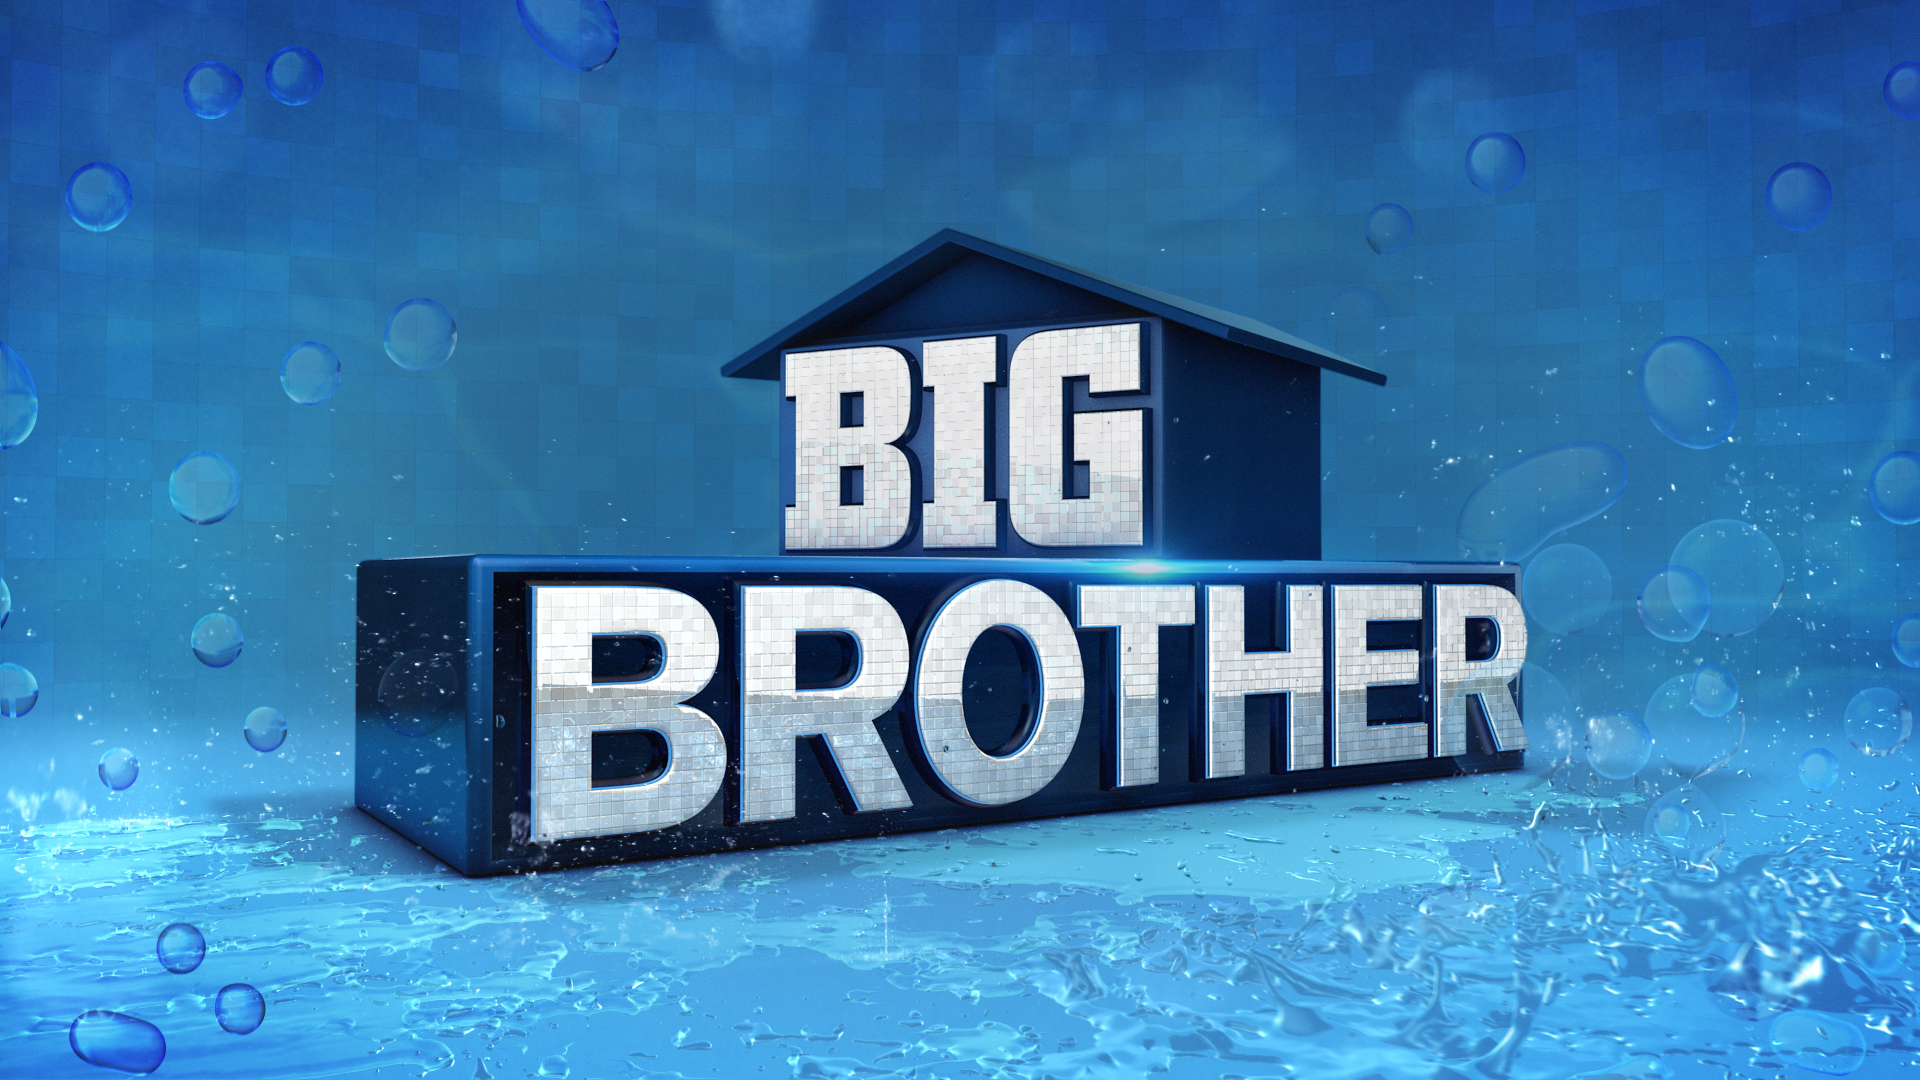 Do you like the new logo for Big Brother BigBrother